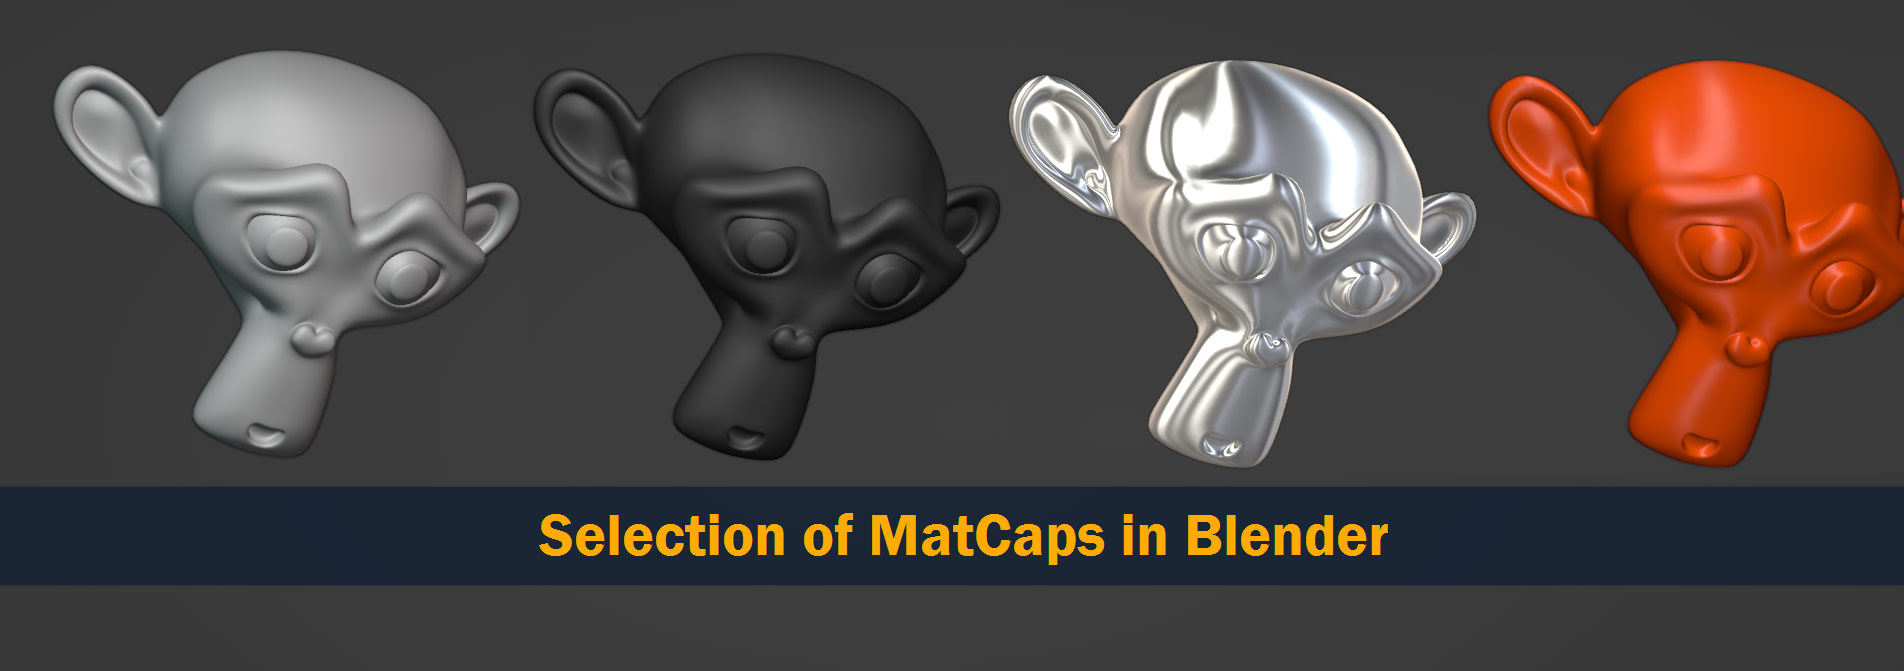 selection of matcaps in blender